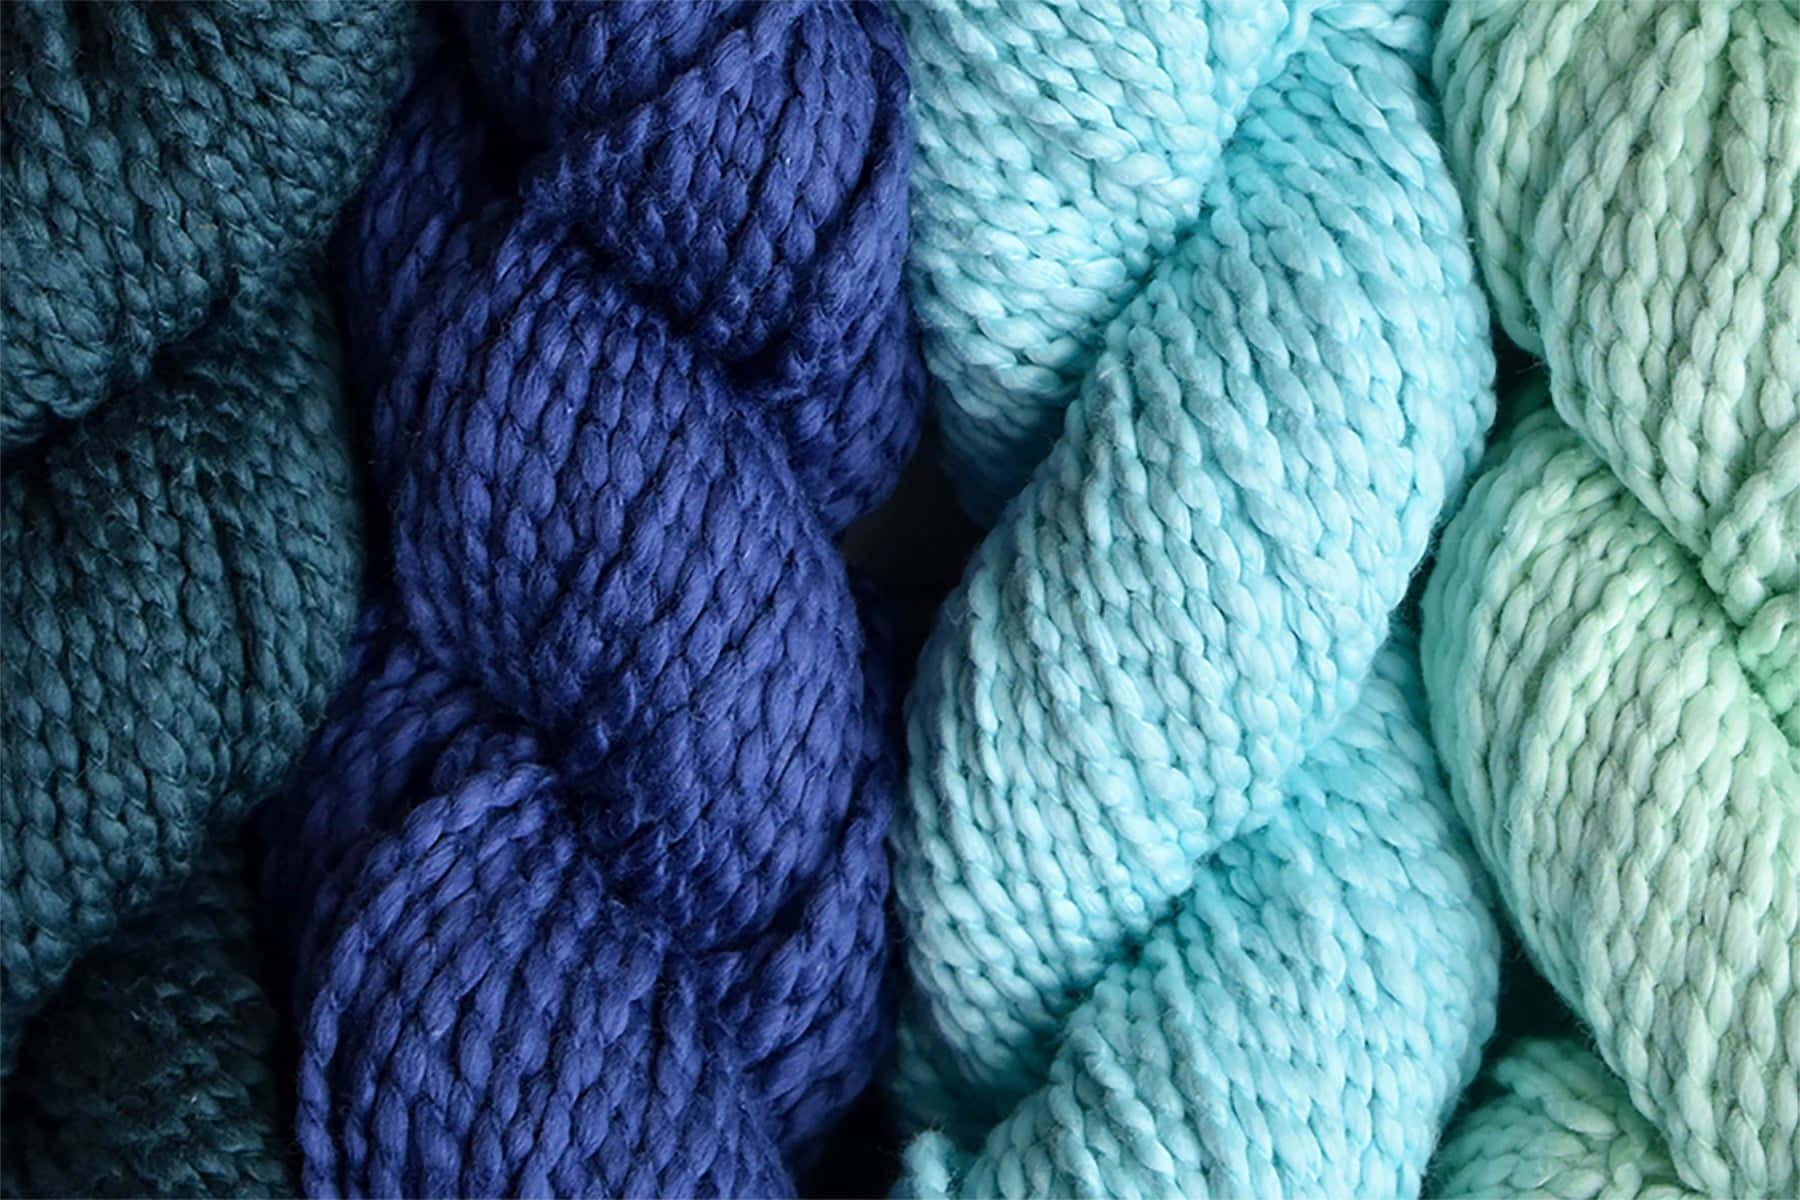 Knitting Yarns In Shades Of Blue Wallpaper